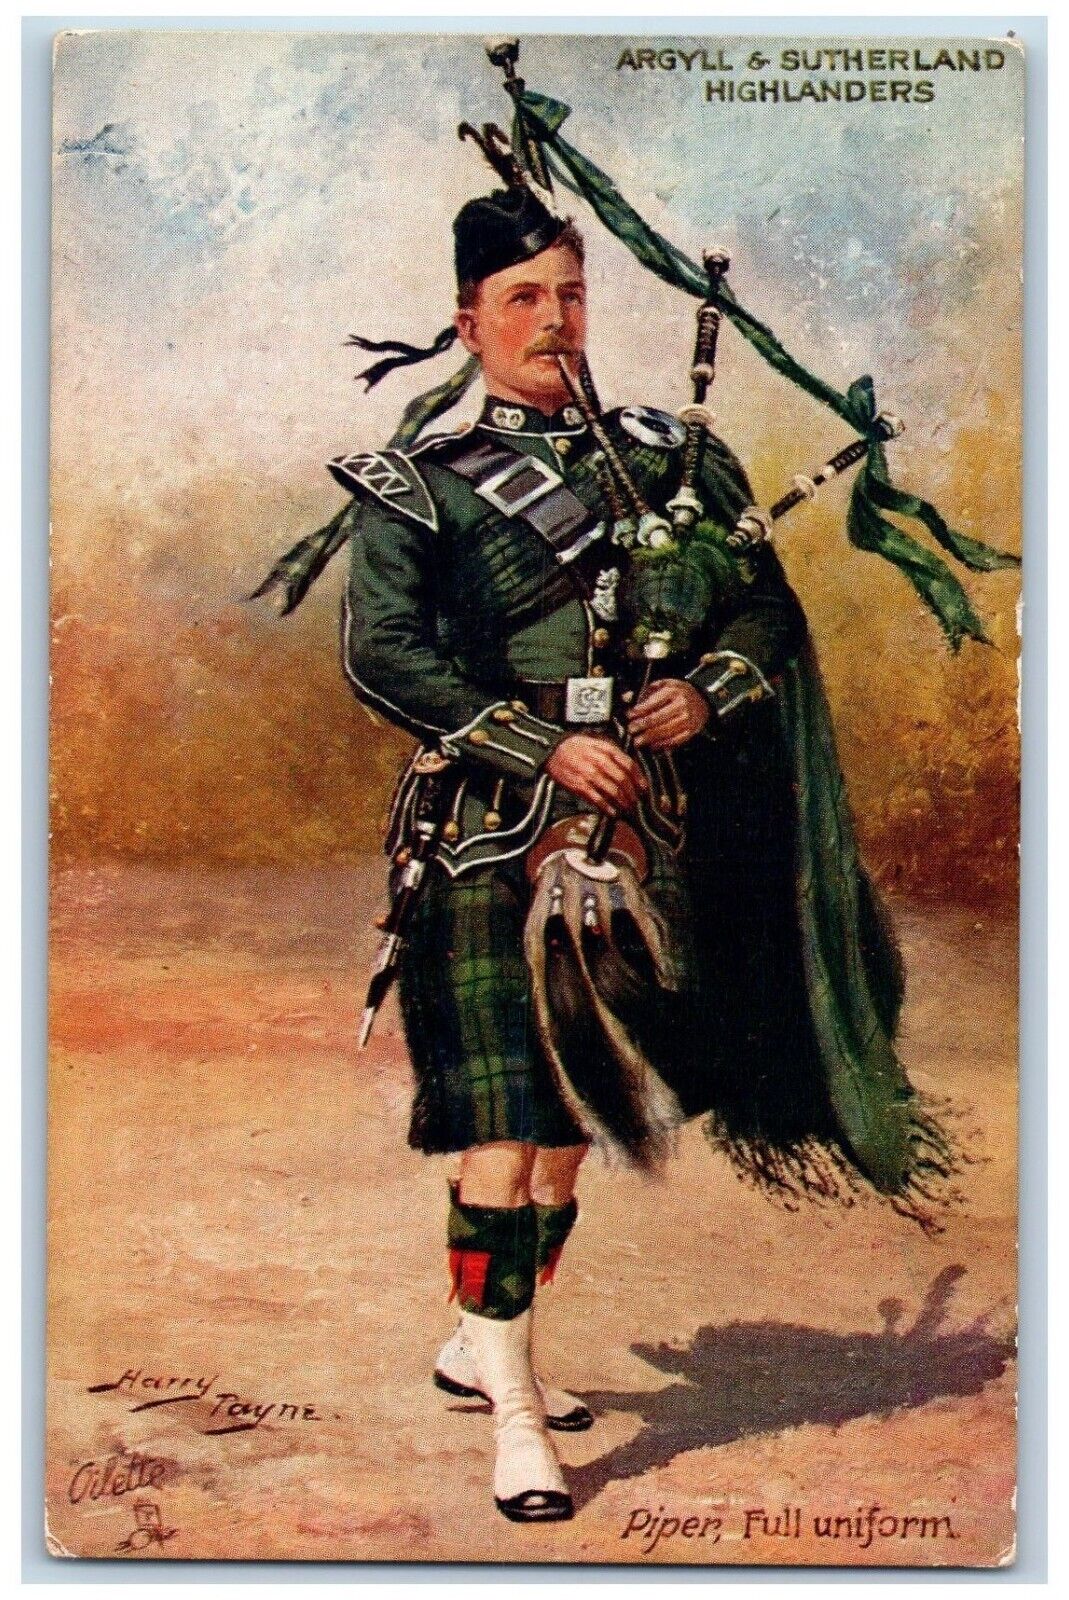 Harry Payne Signed Postcard Scotland Kilt Bagpipes Piper Full Uniform Oilette